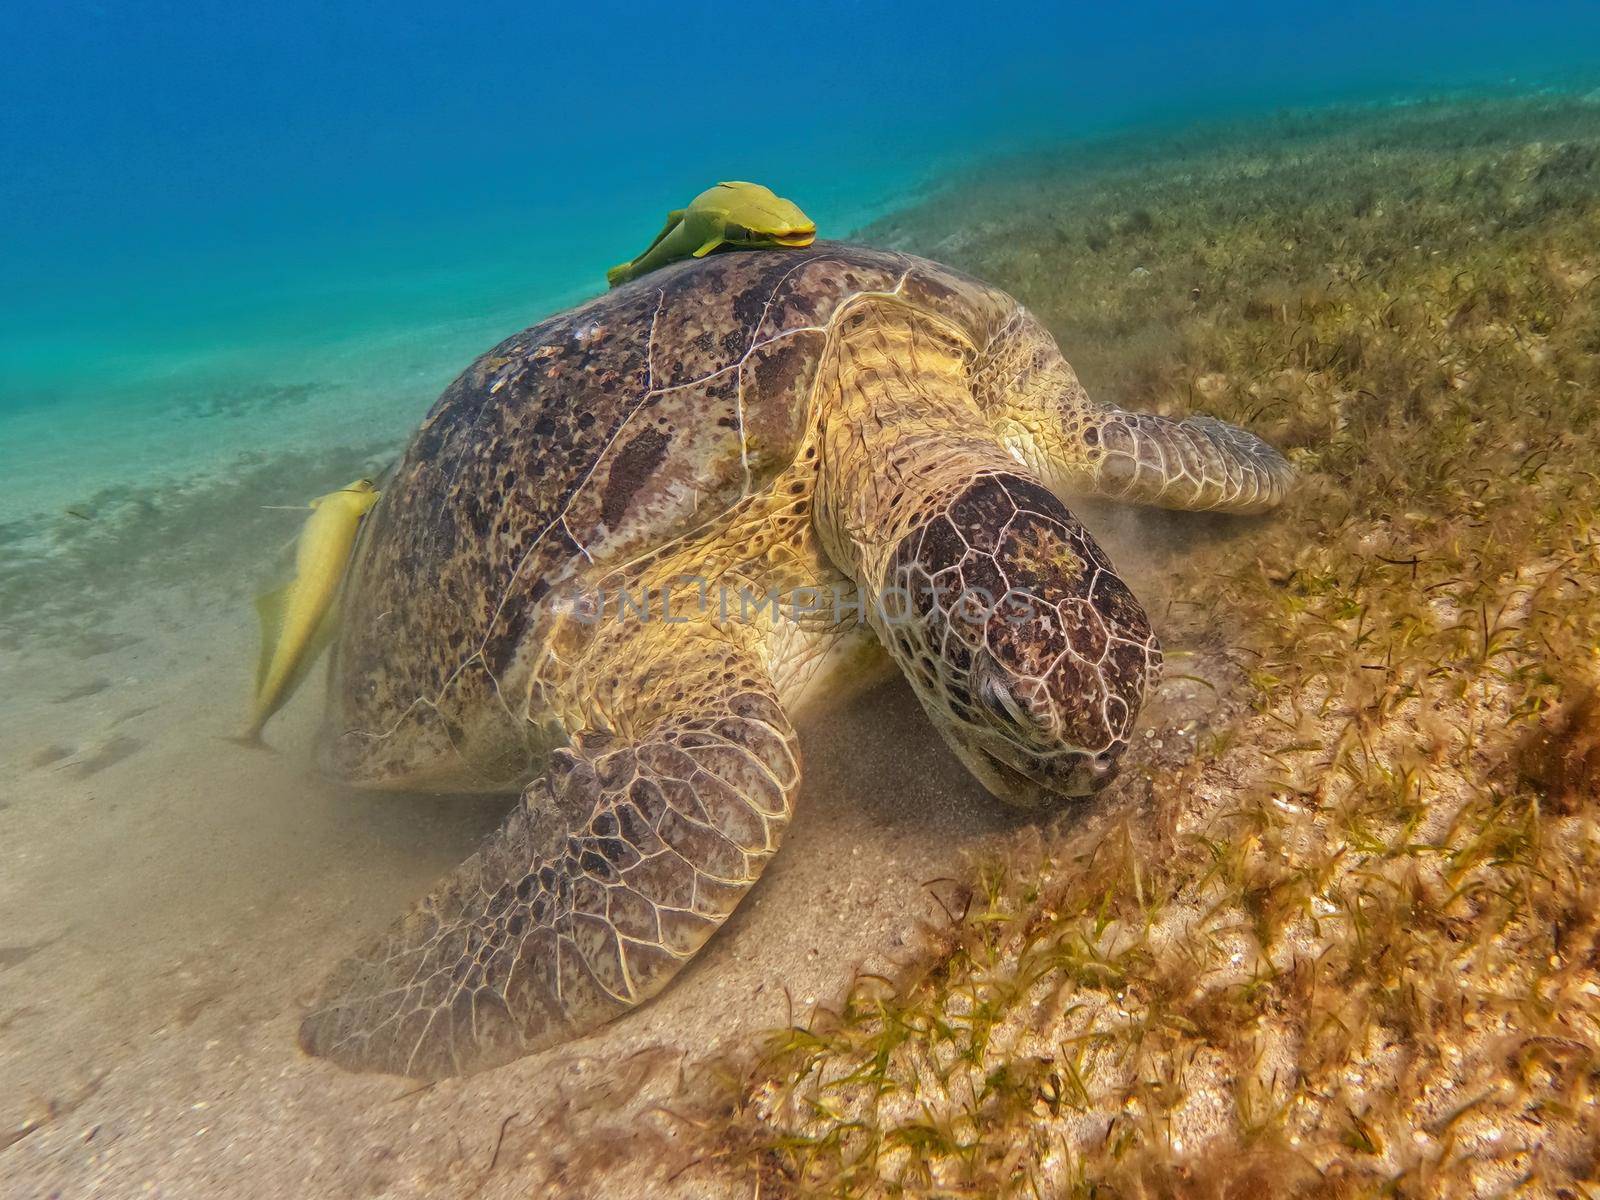 Adult green sea turtle, Chelonia mydas, Marsa Alam Egypt by artush